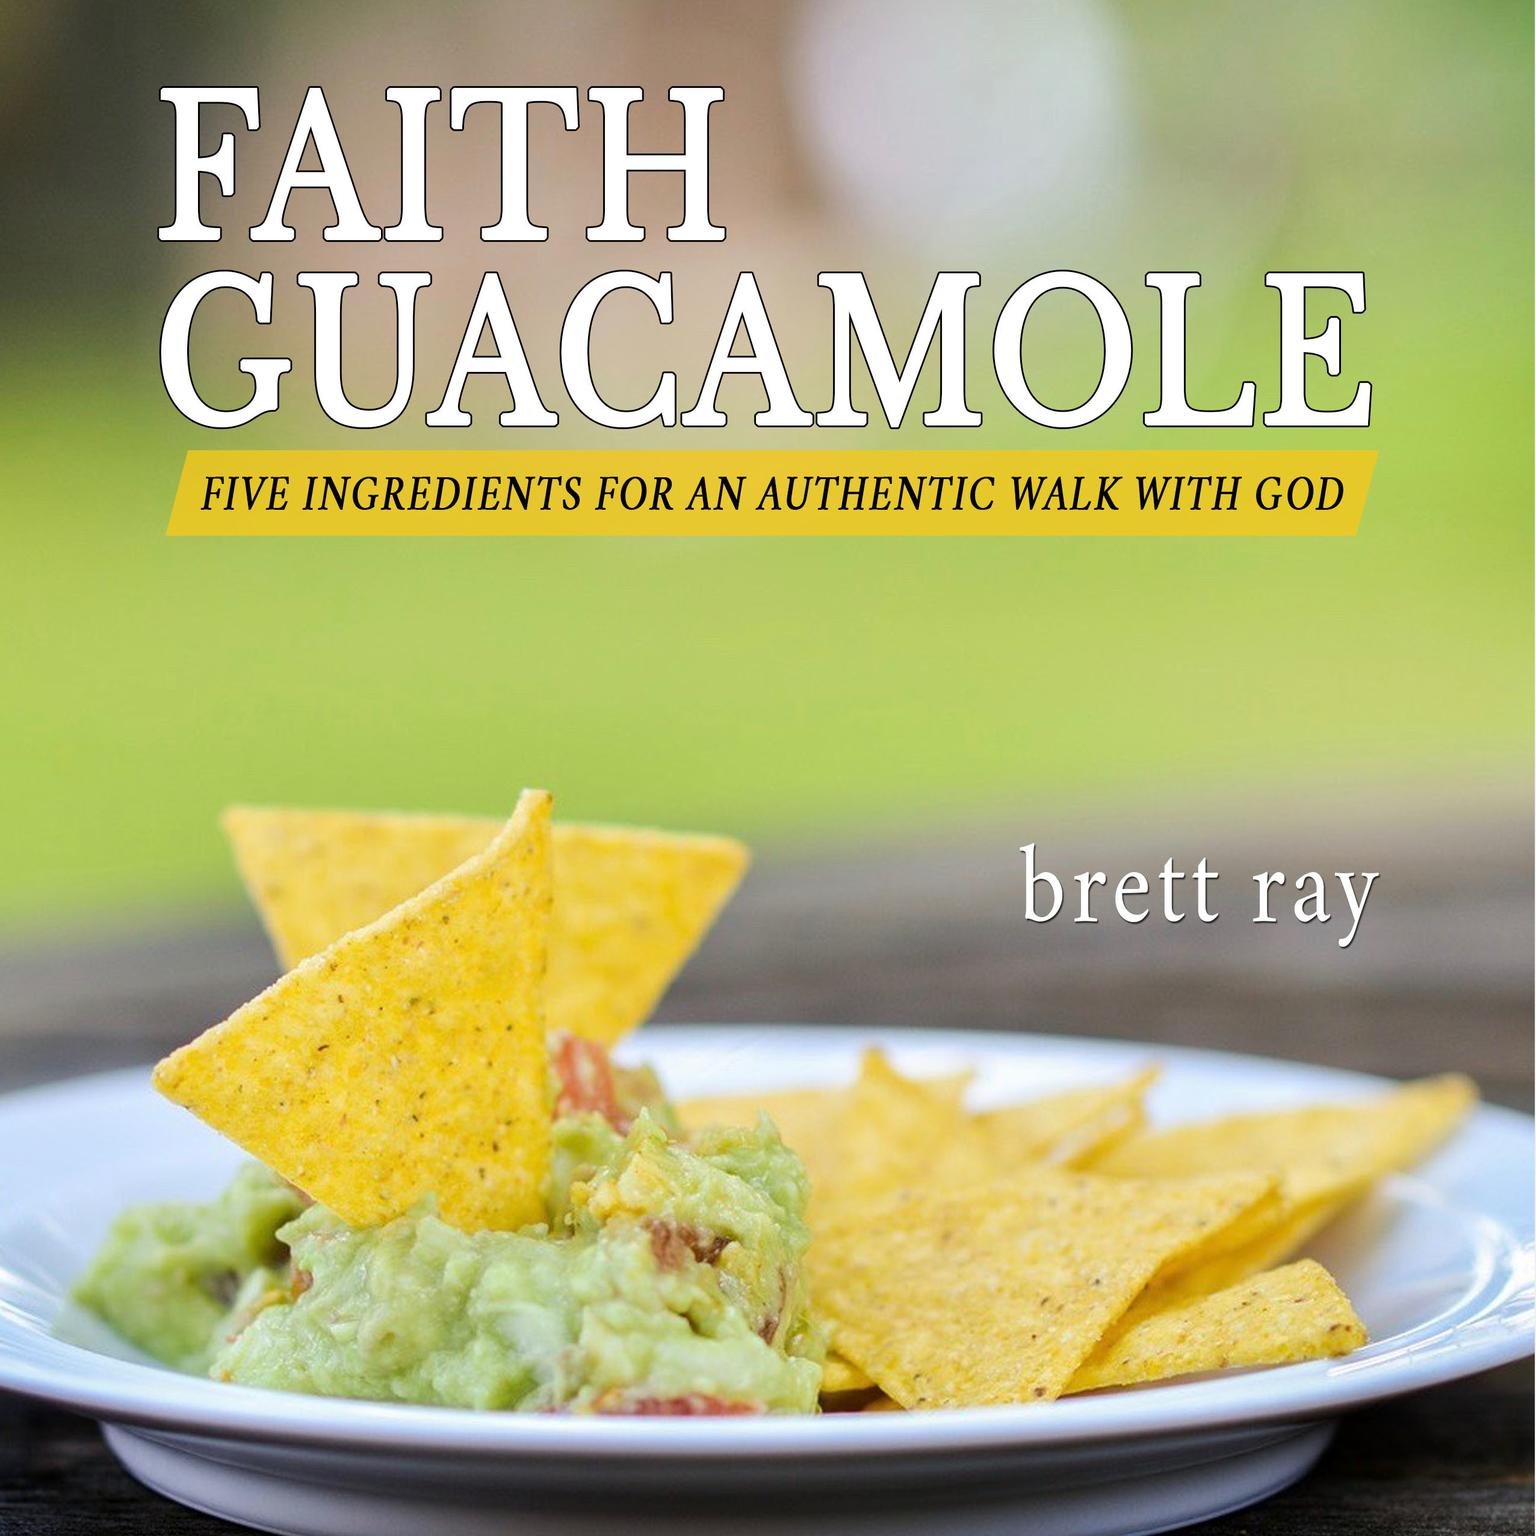 Faith Guacamole Audiobook, by Brett Ray